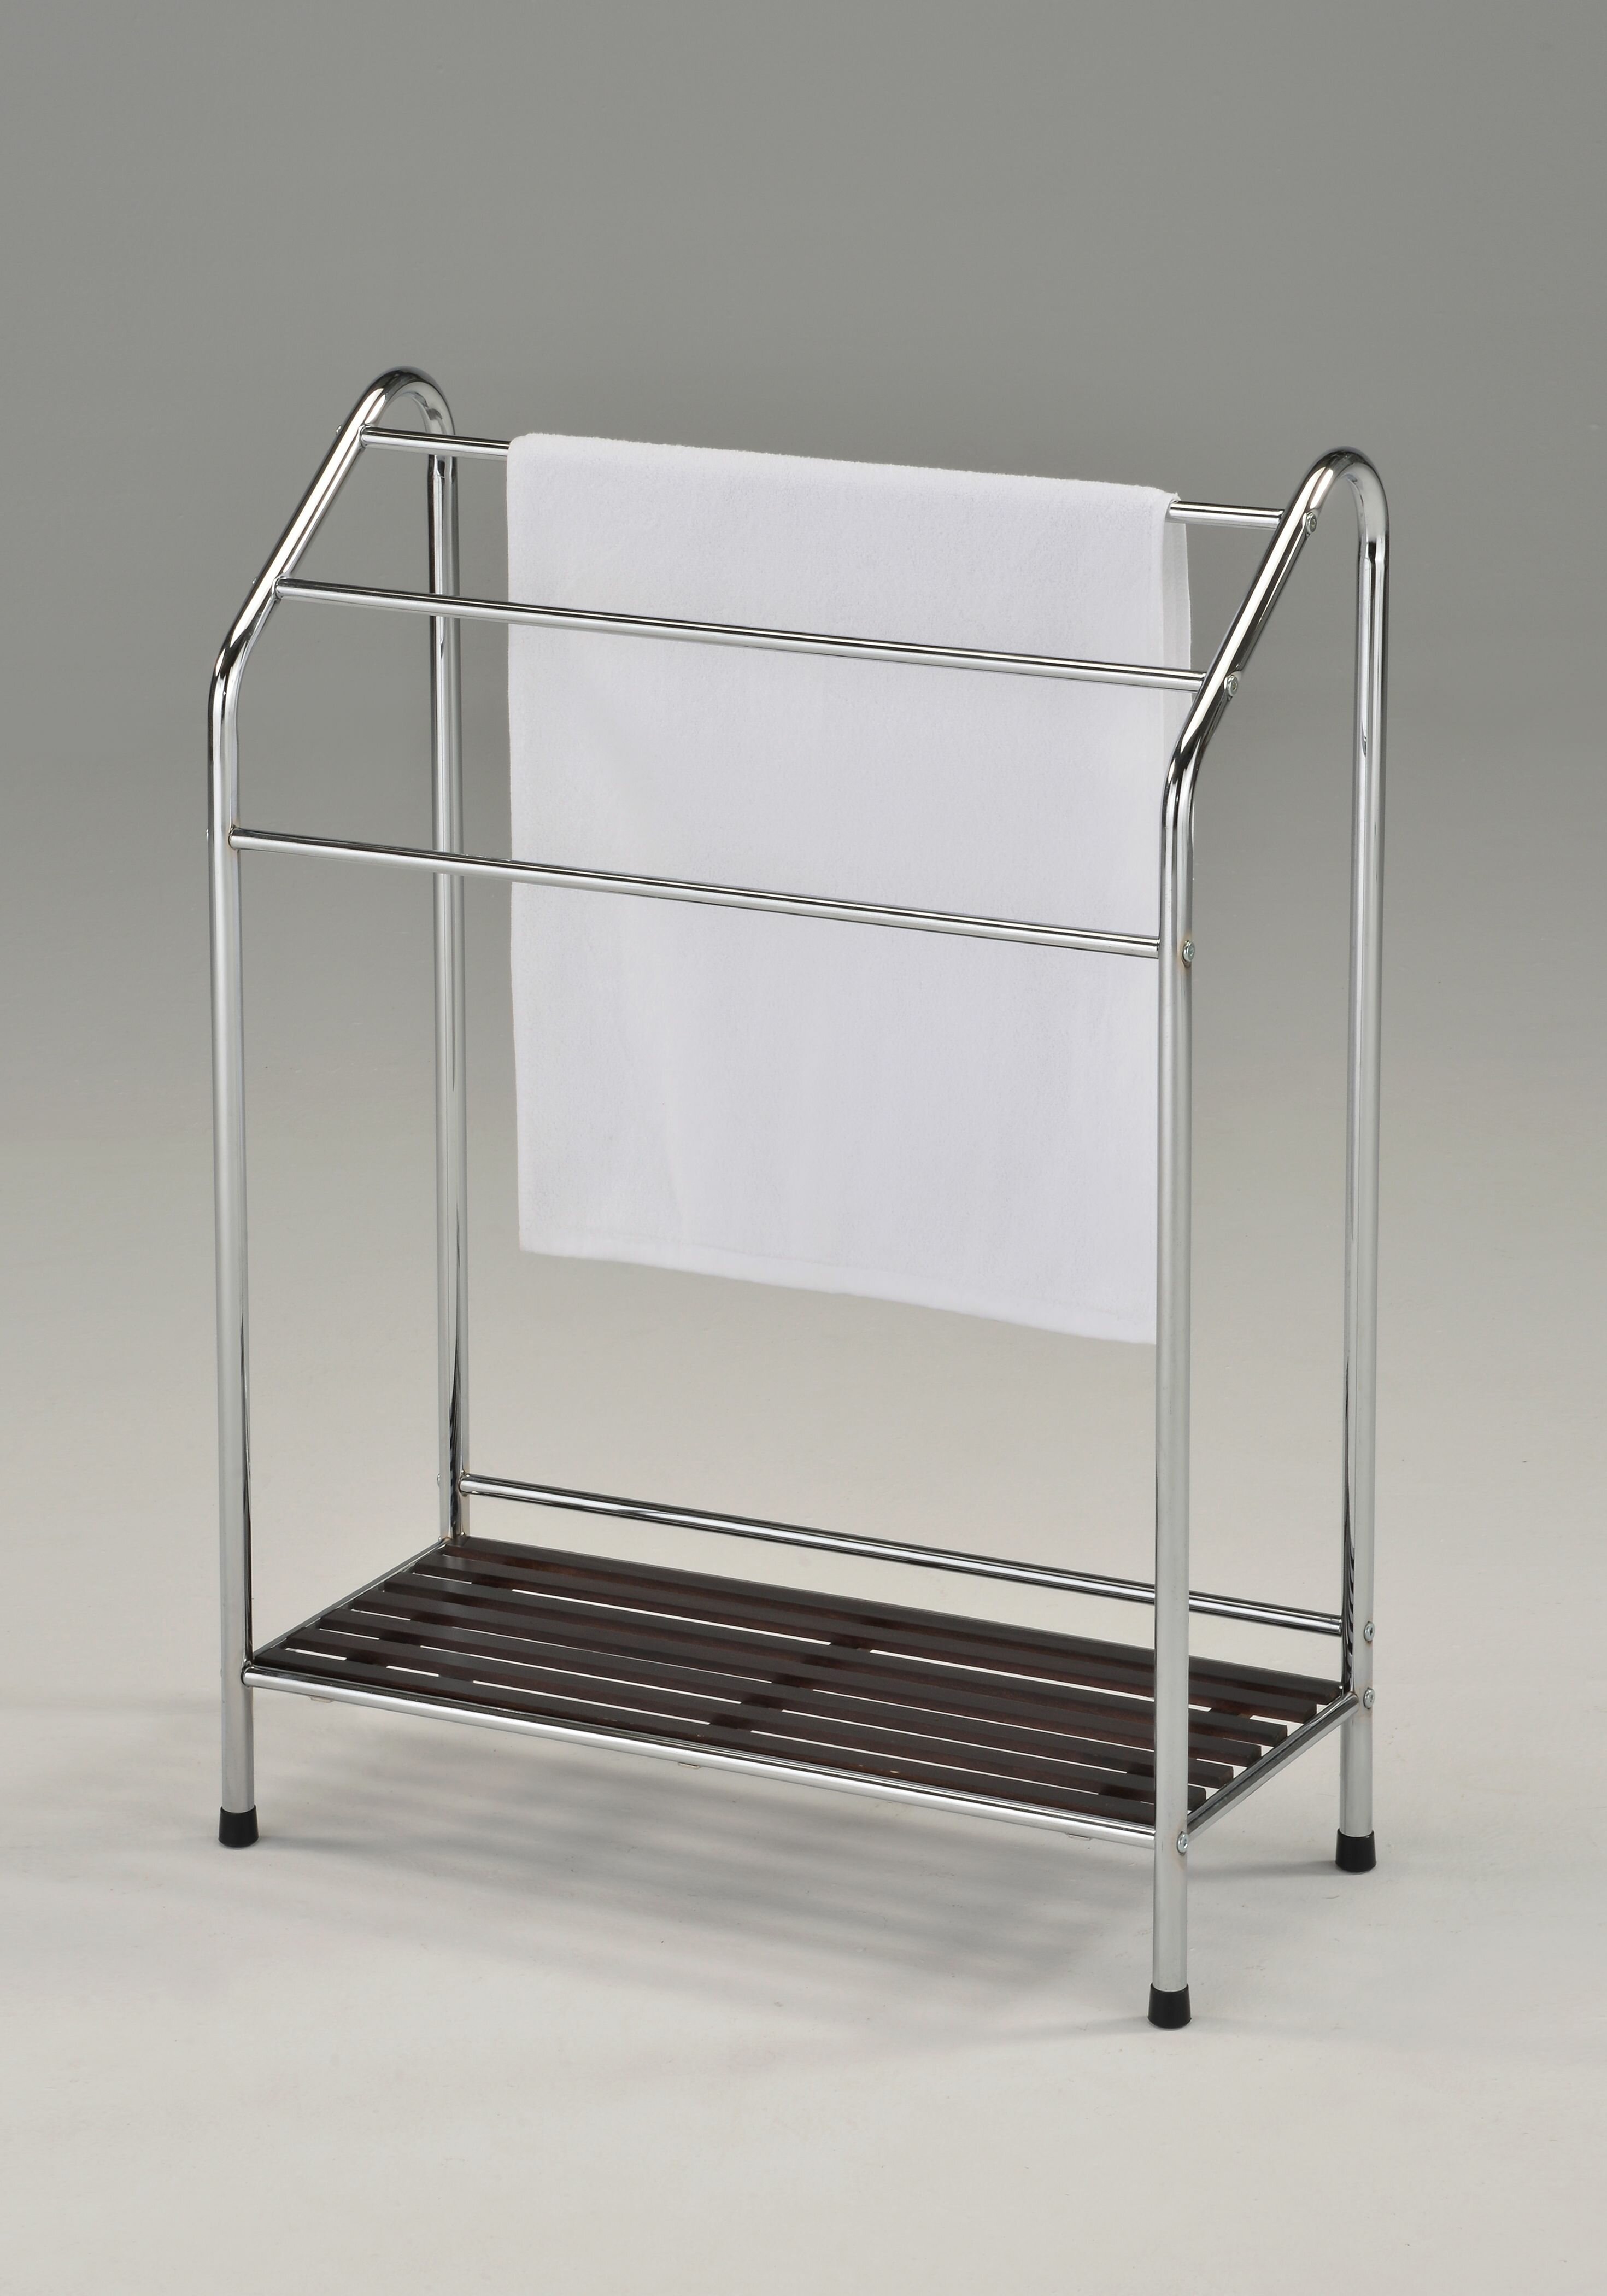 Unibos Chrome Floor Standing Towel Rack Stand Rail with Lower Shelf 